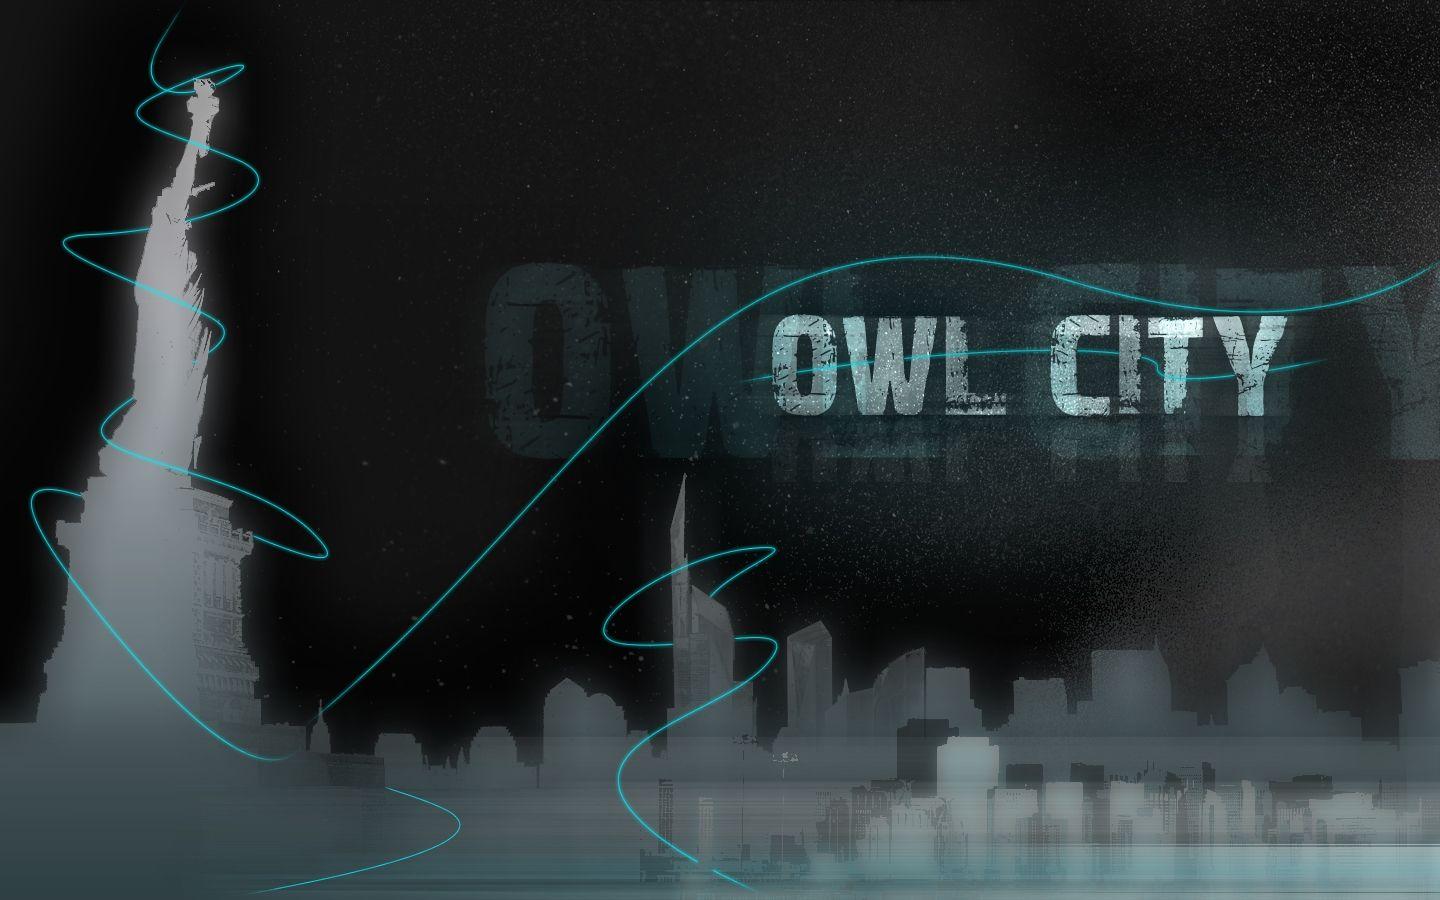 Download Wallpaper, Download 2560x1600 owl city 1440x900 wallpaper